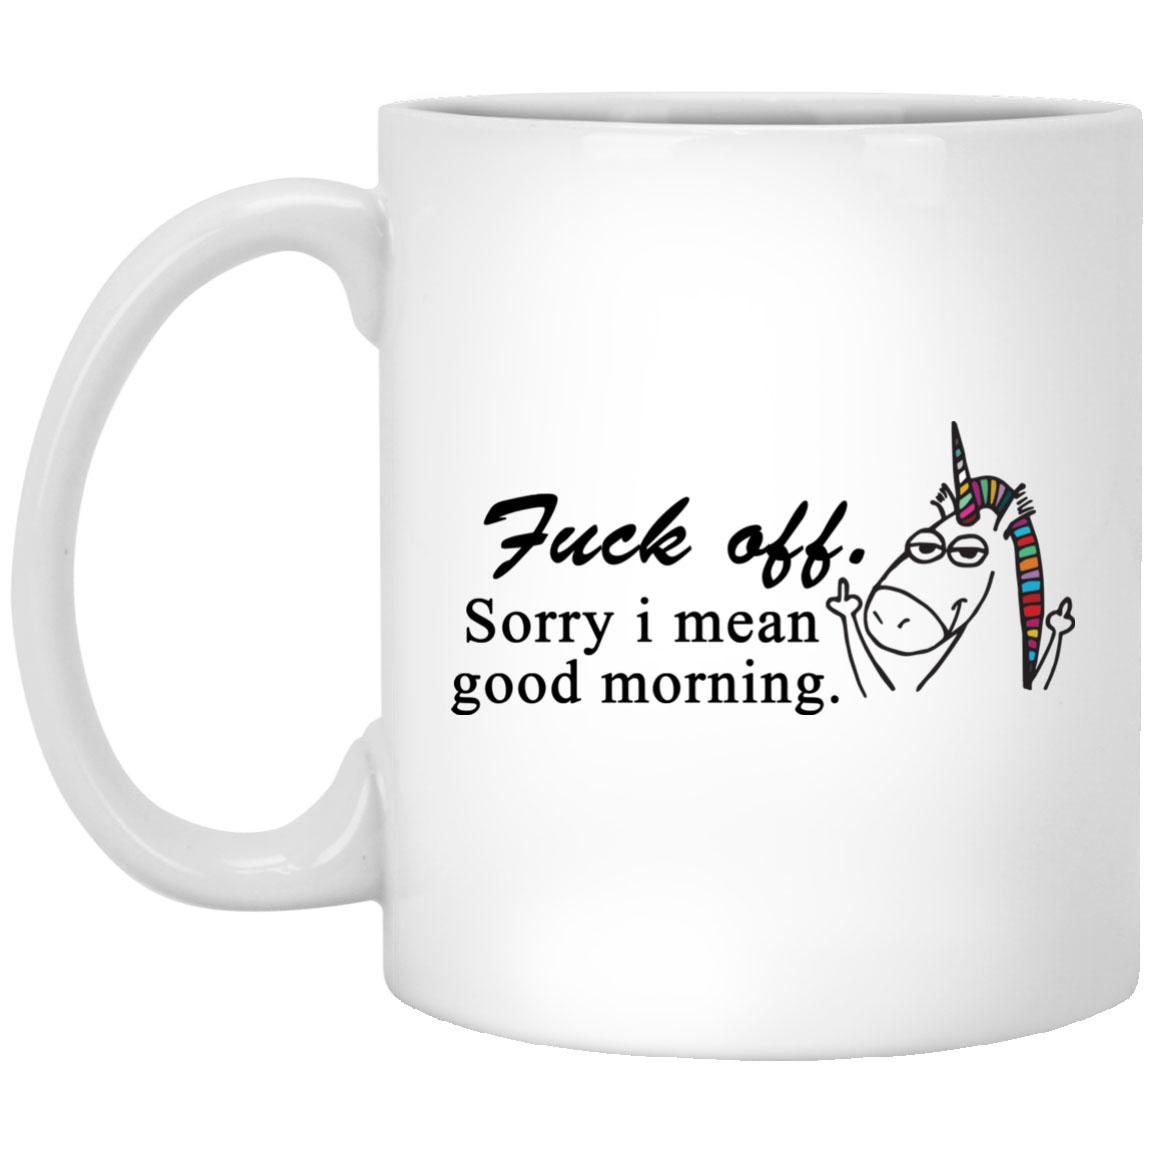 Fuck Off sorry I mean good morning mug